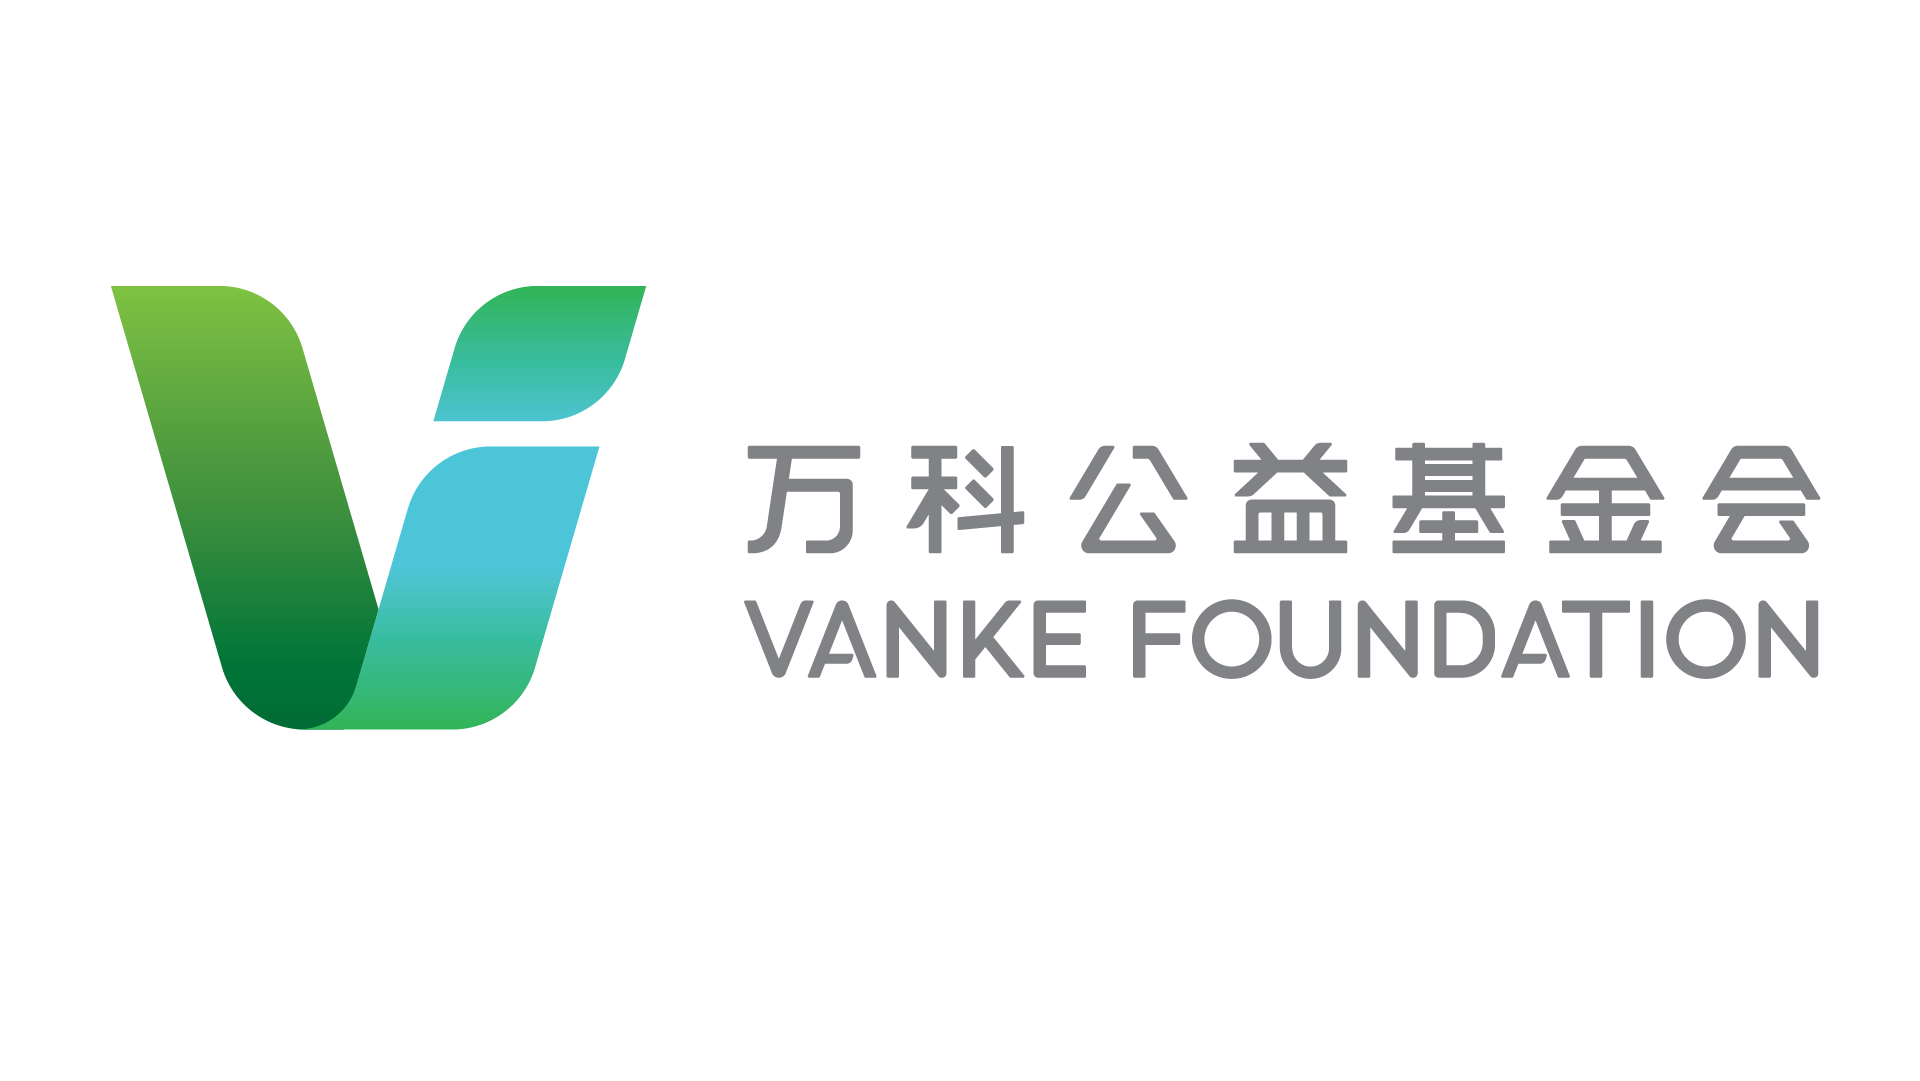 Vanke Public Welfare Foundation